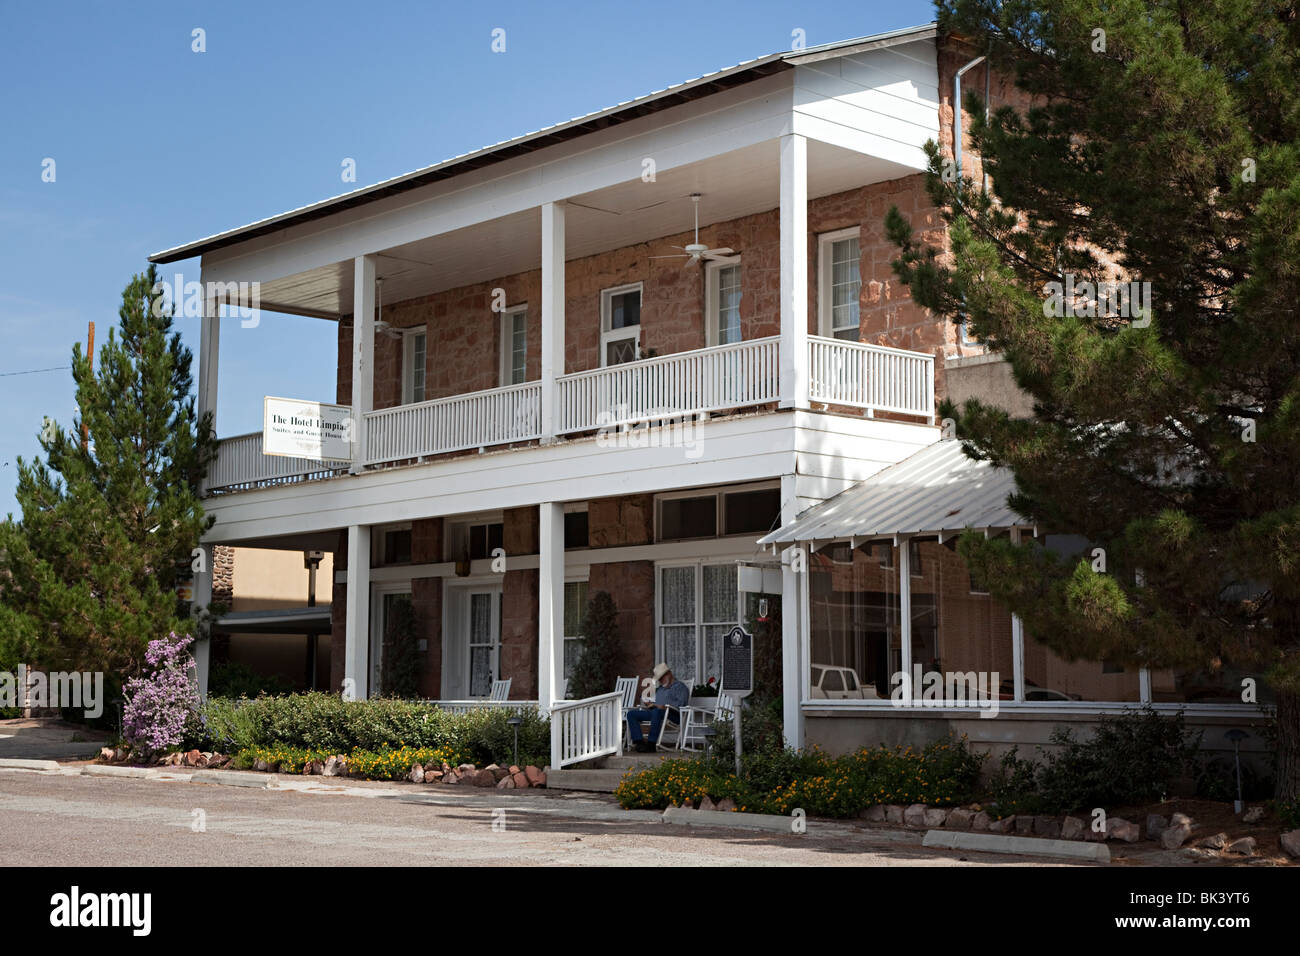 Histórico hotel Limpia Fort Davis, Texas, EE.UU. Foto de stock